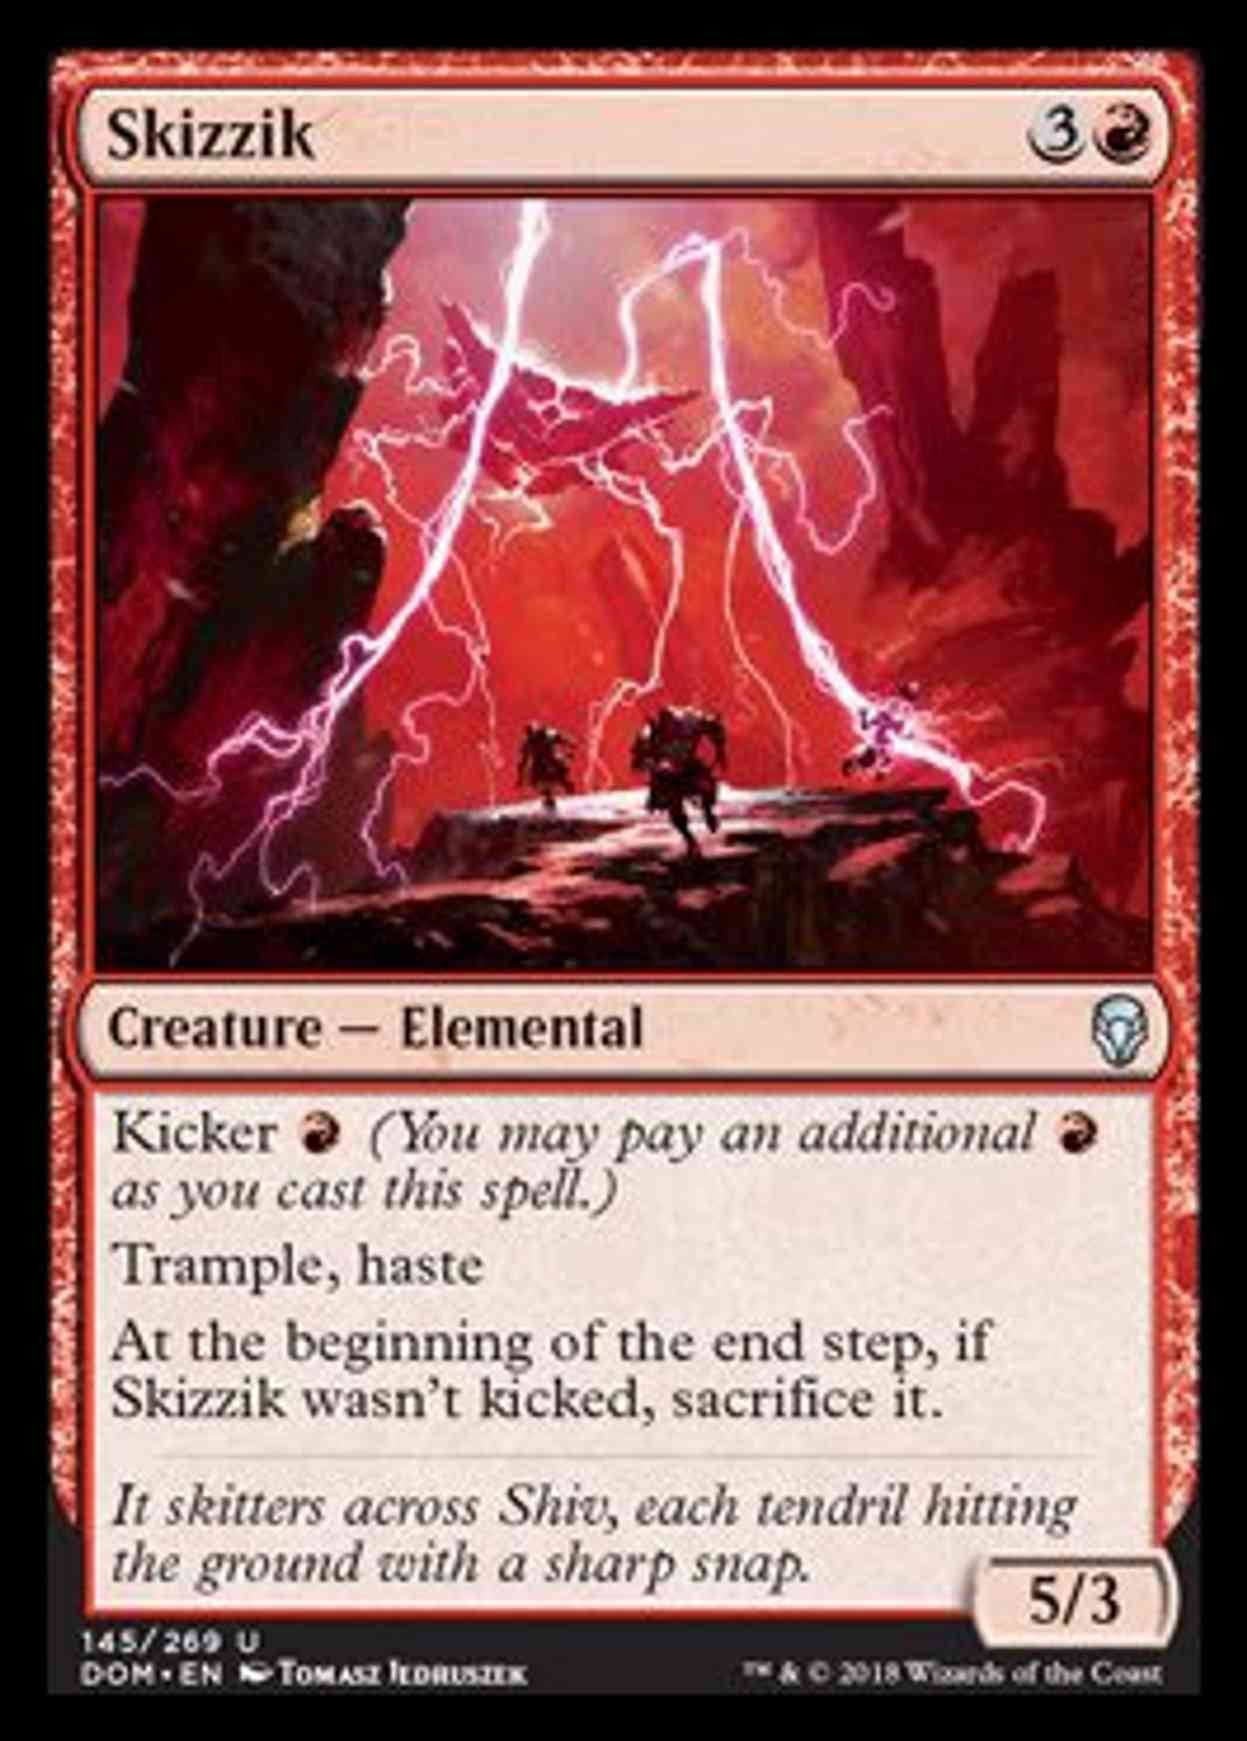 Skizzik magic card front